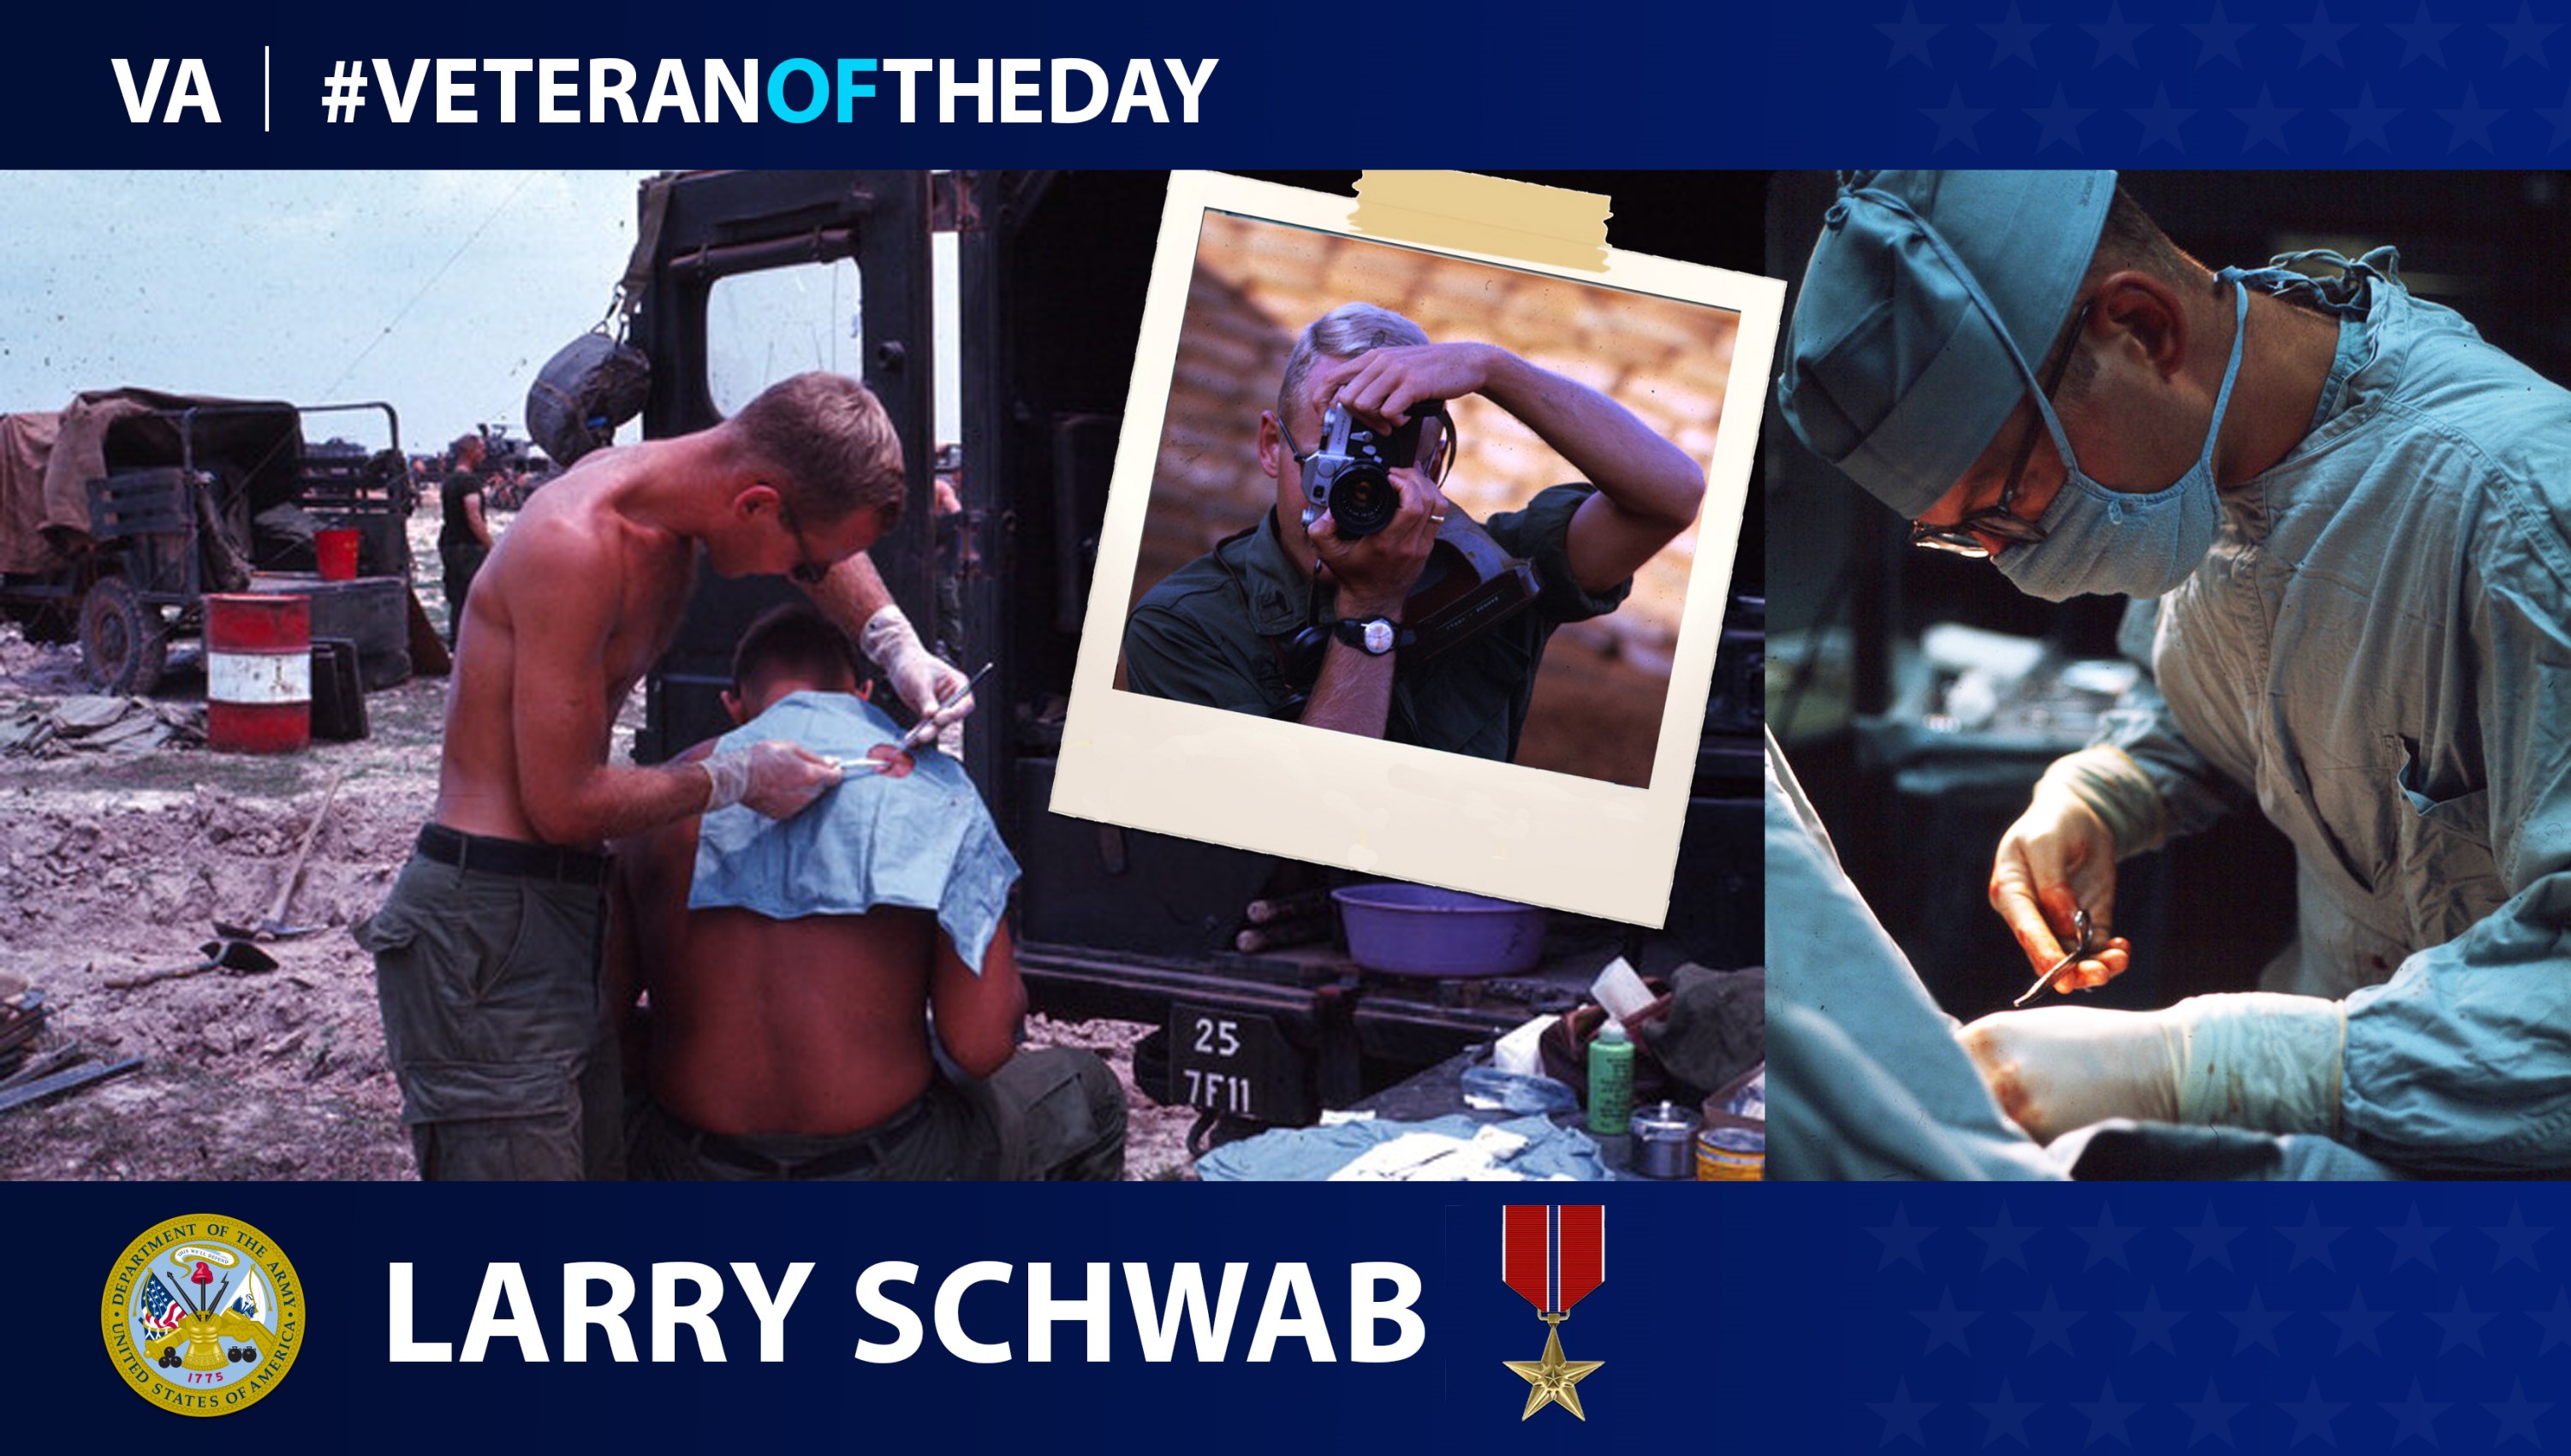 Army Veteran Larry Schwab is today's Veteran of the Day.